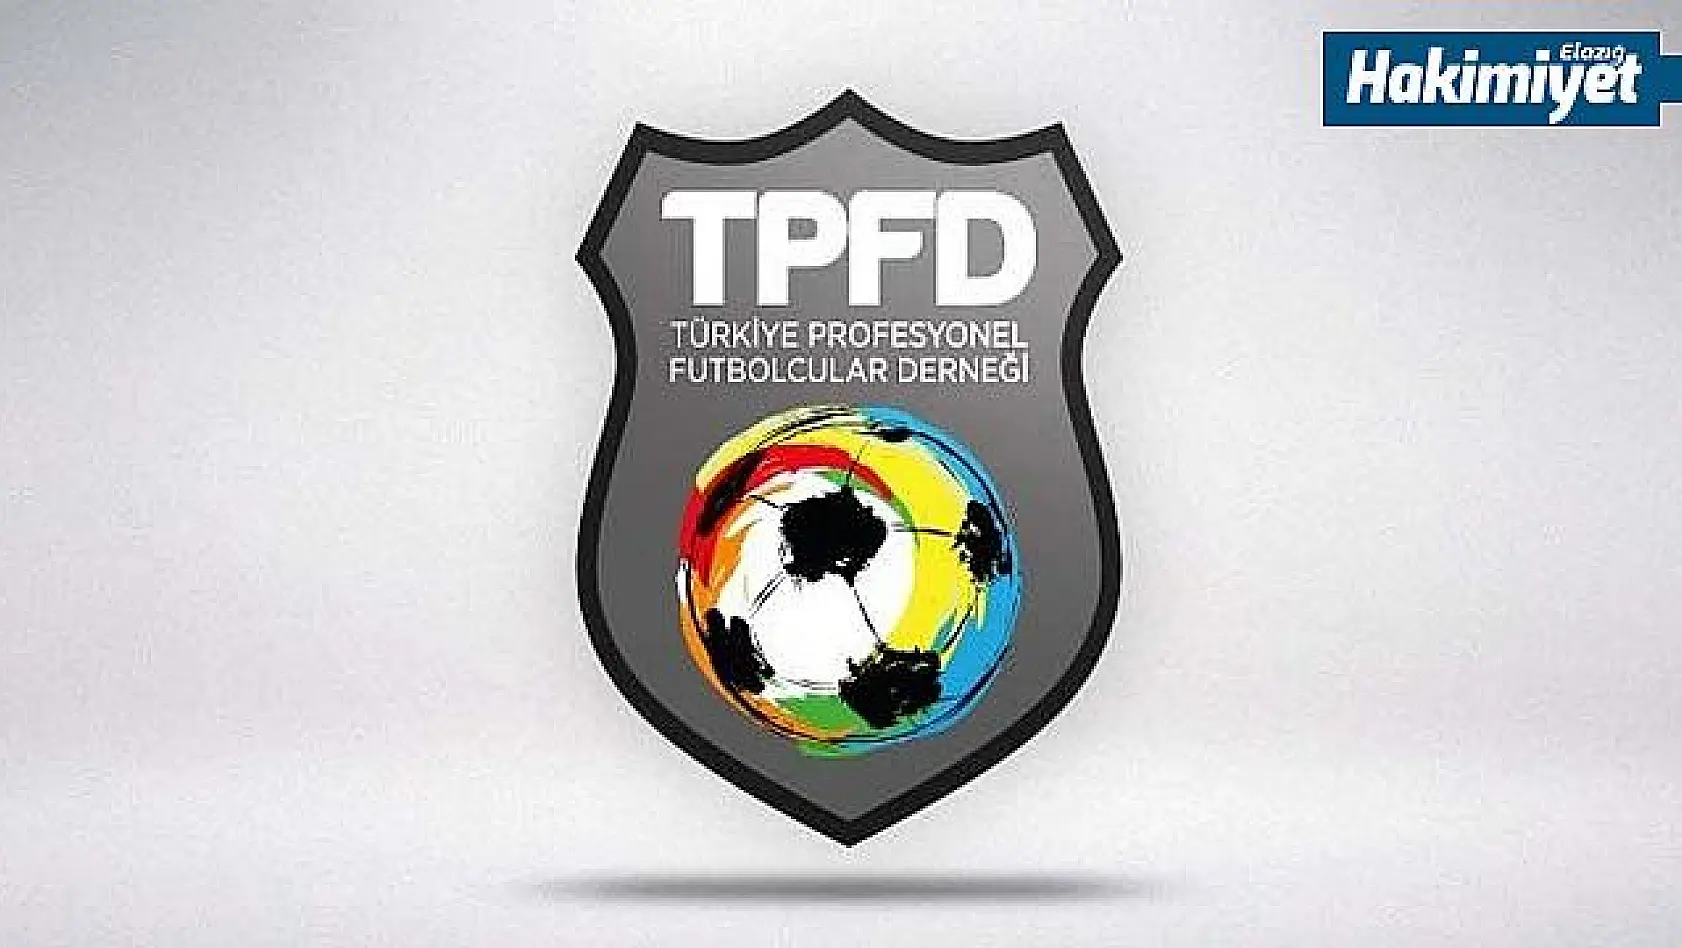 TPFD'den futbolculara yardım çağrısı